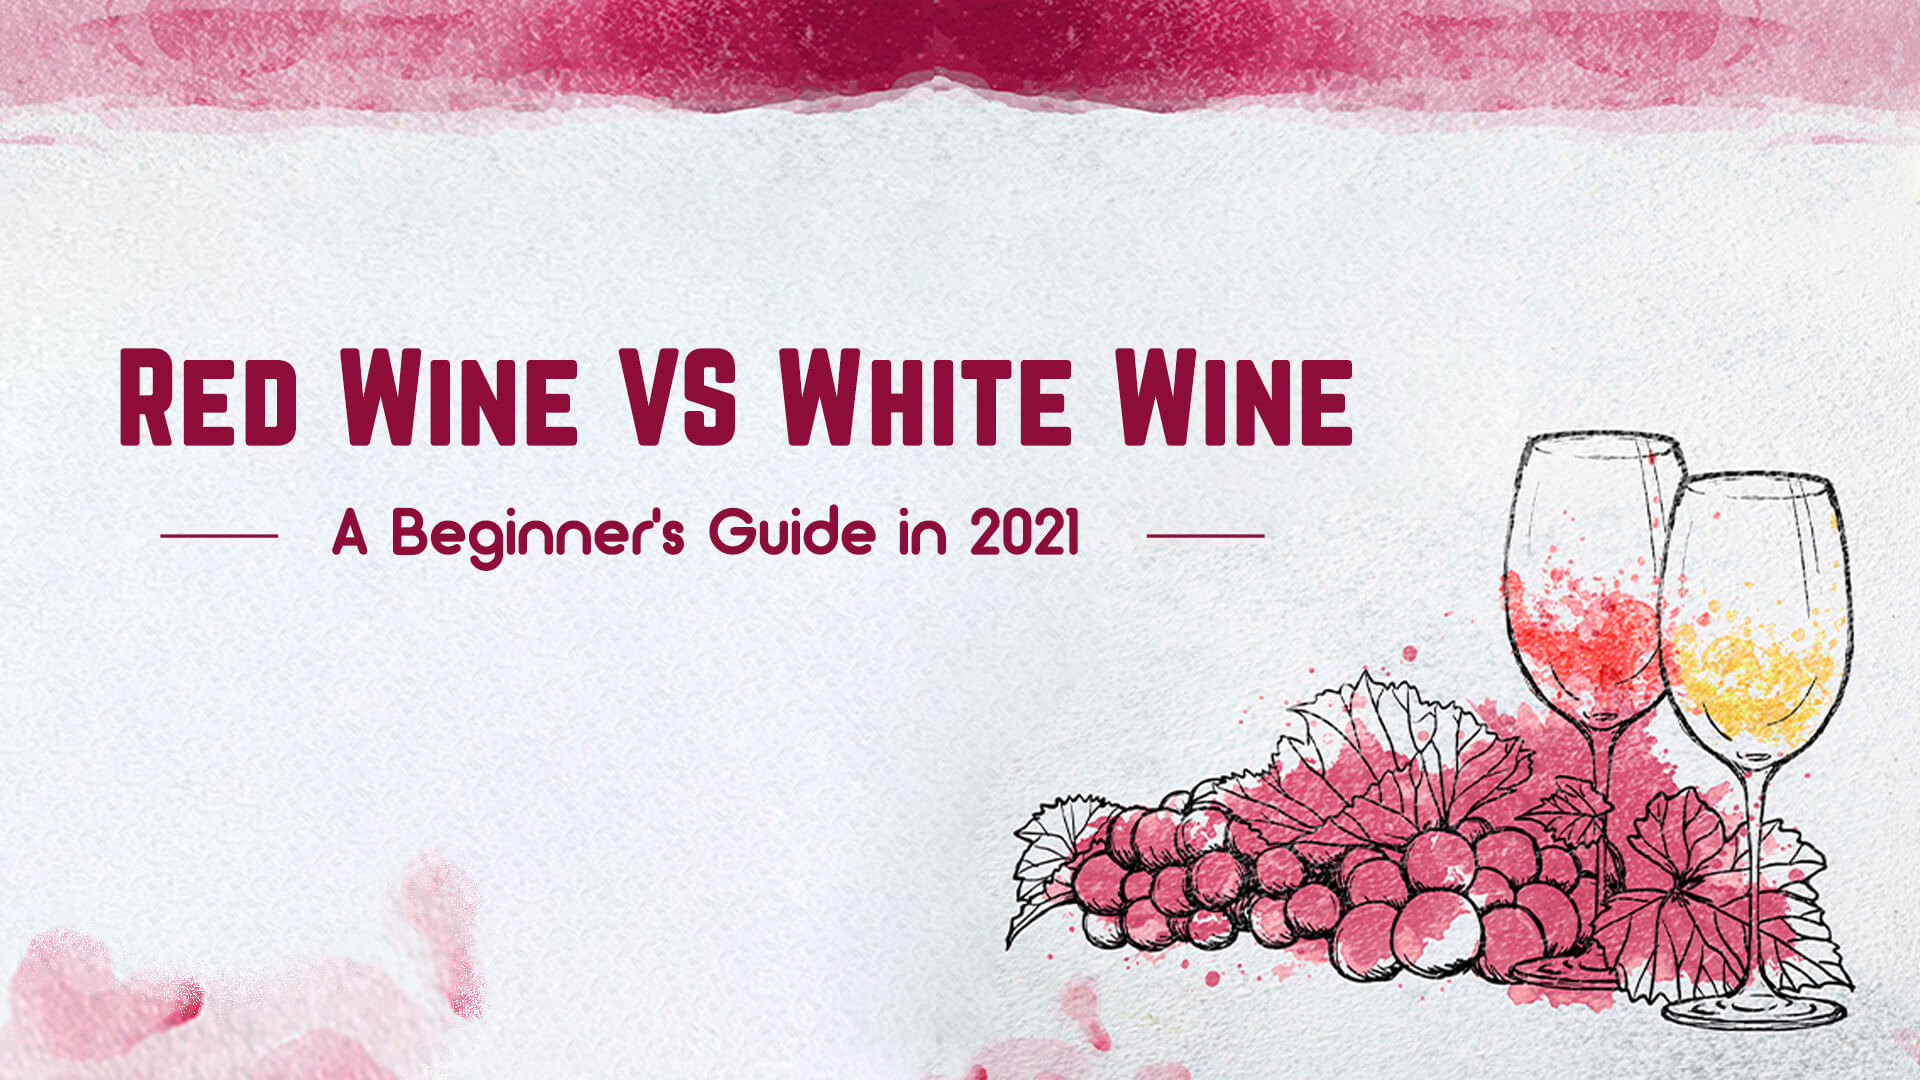 https://centurywines.com.sg/wp-content/uploads/2021/01/red-wine-vs-white-wine-beginners-guide.jpg